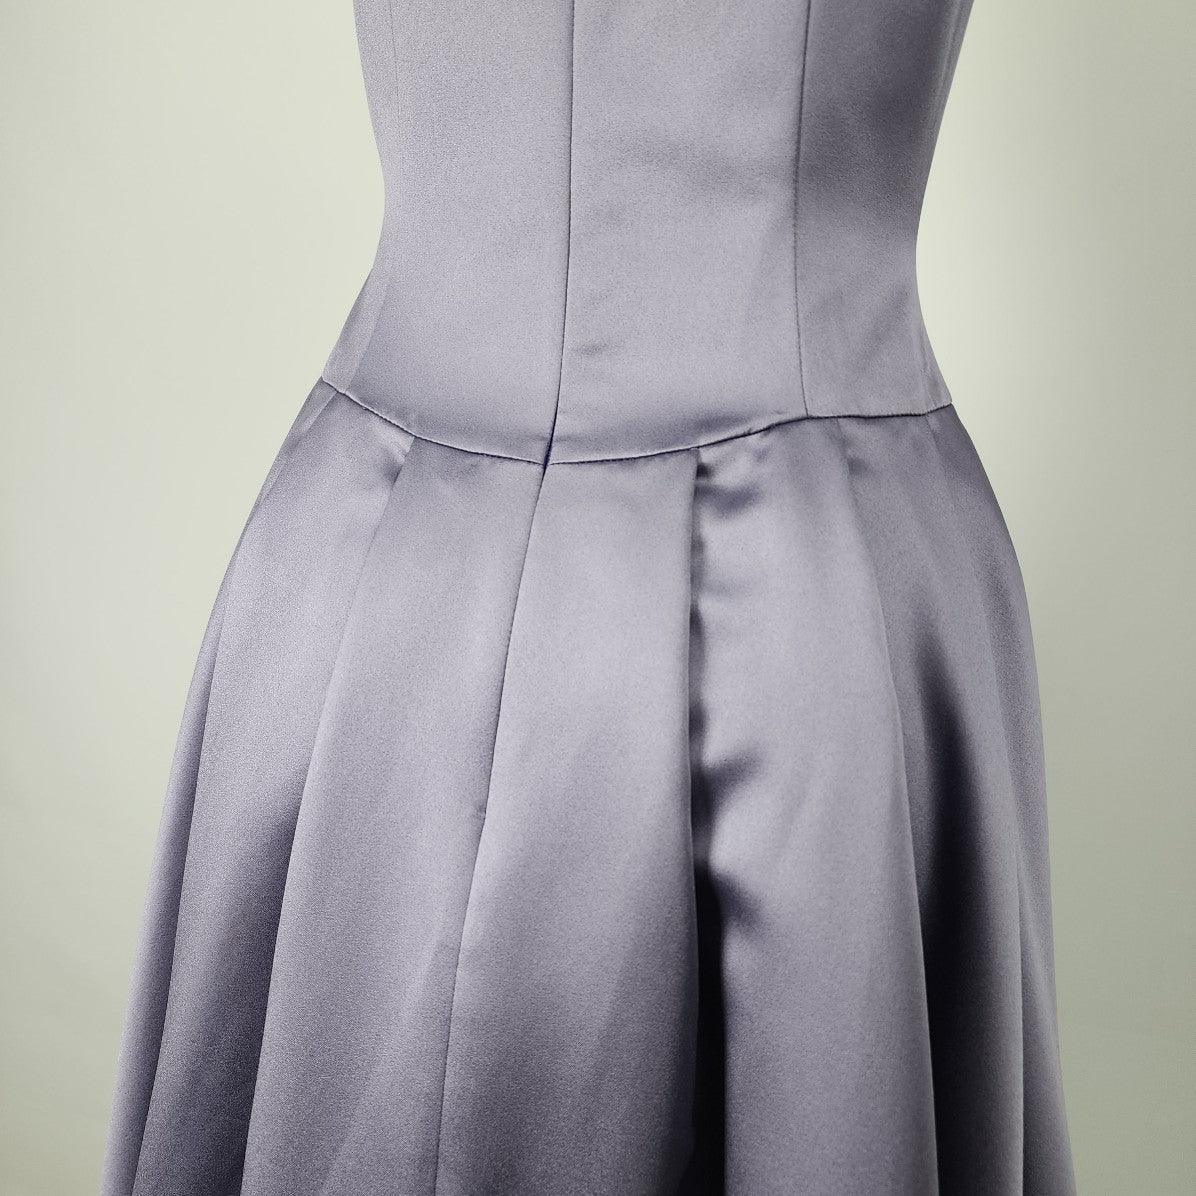 Vintage B2 Purple Satin Embroidered Neckline Long Gown Dress Size 10